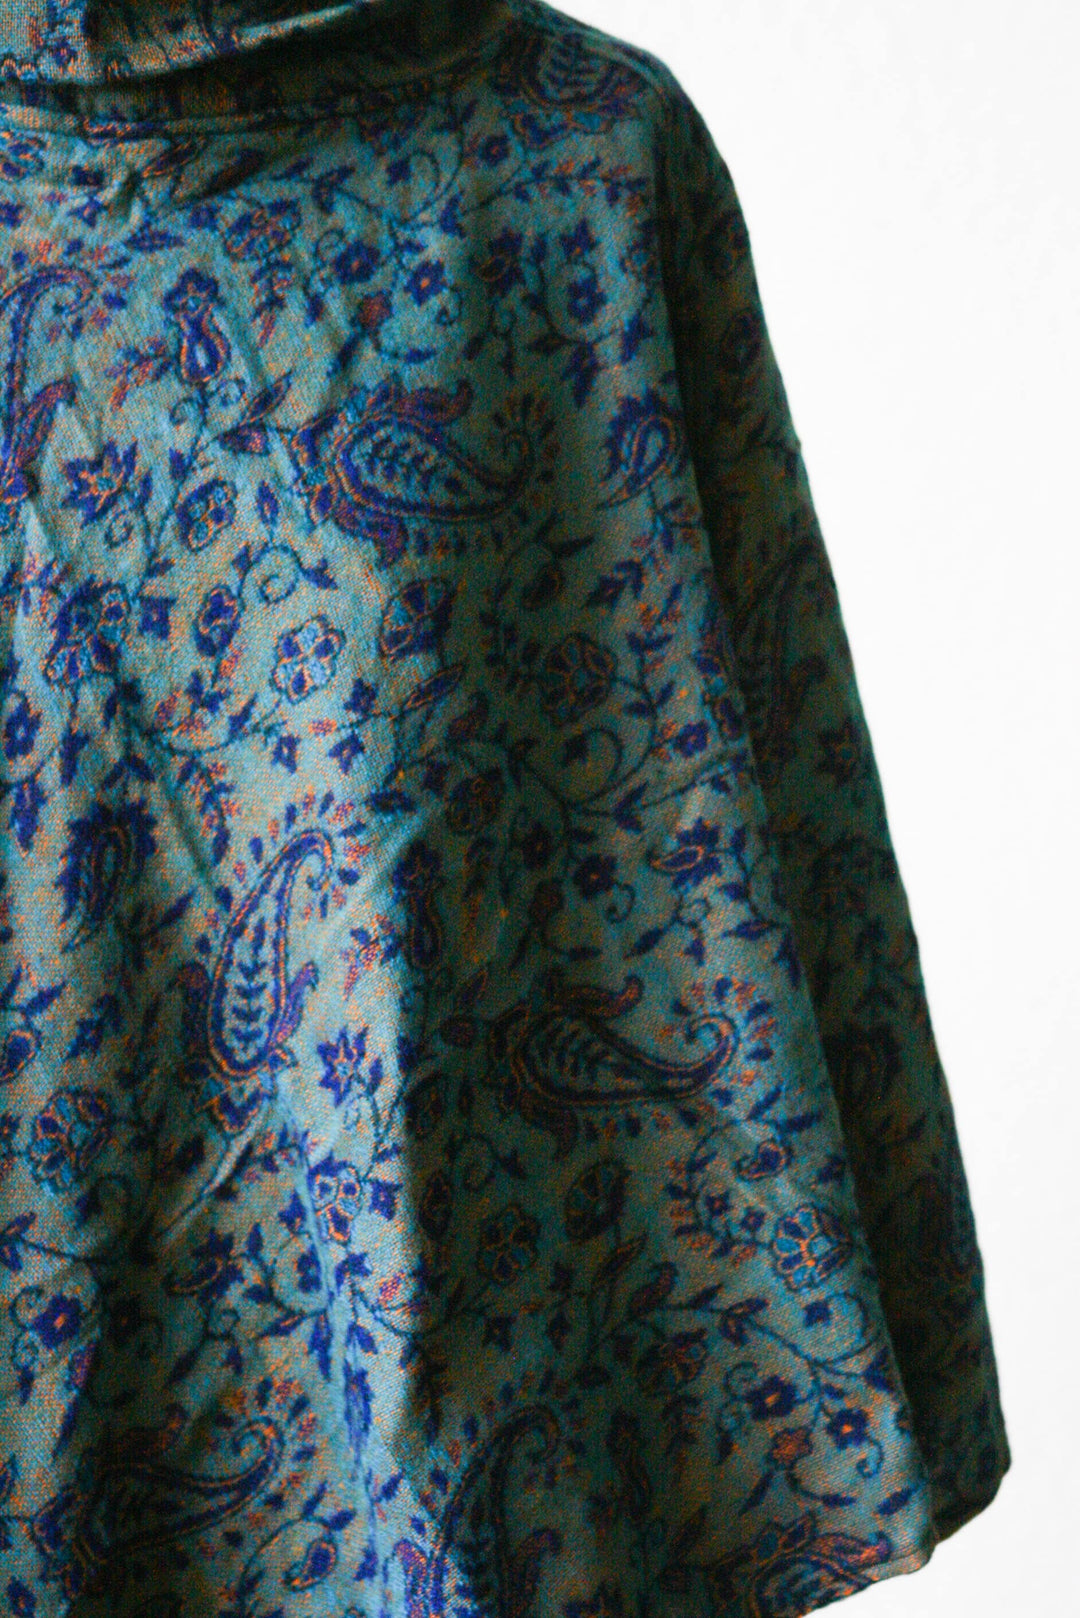 Poncho Paisley Muster Blau Überwurf Detailaufnahme Muster